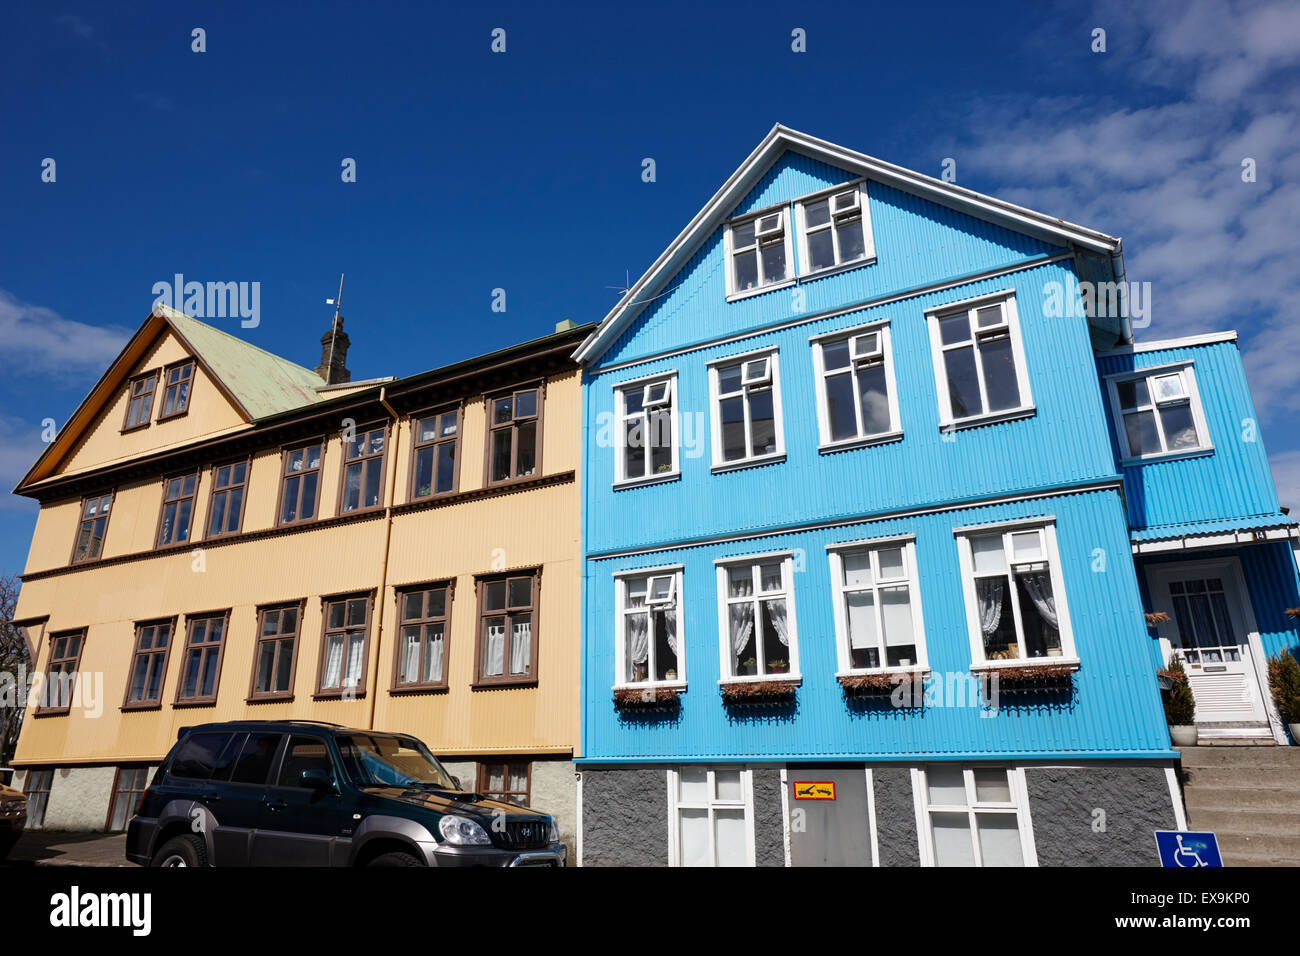 mehrstöckigen bunt bemalten Wellblech verkleidete Gebäude Reykjavik Island Stockfoto